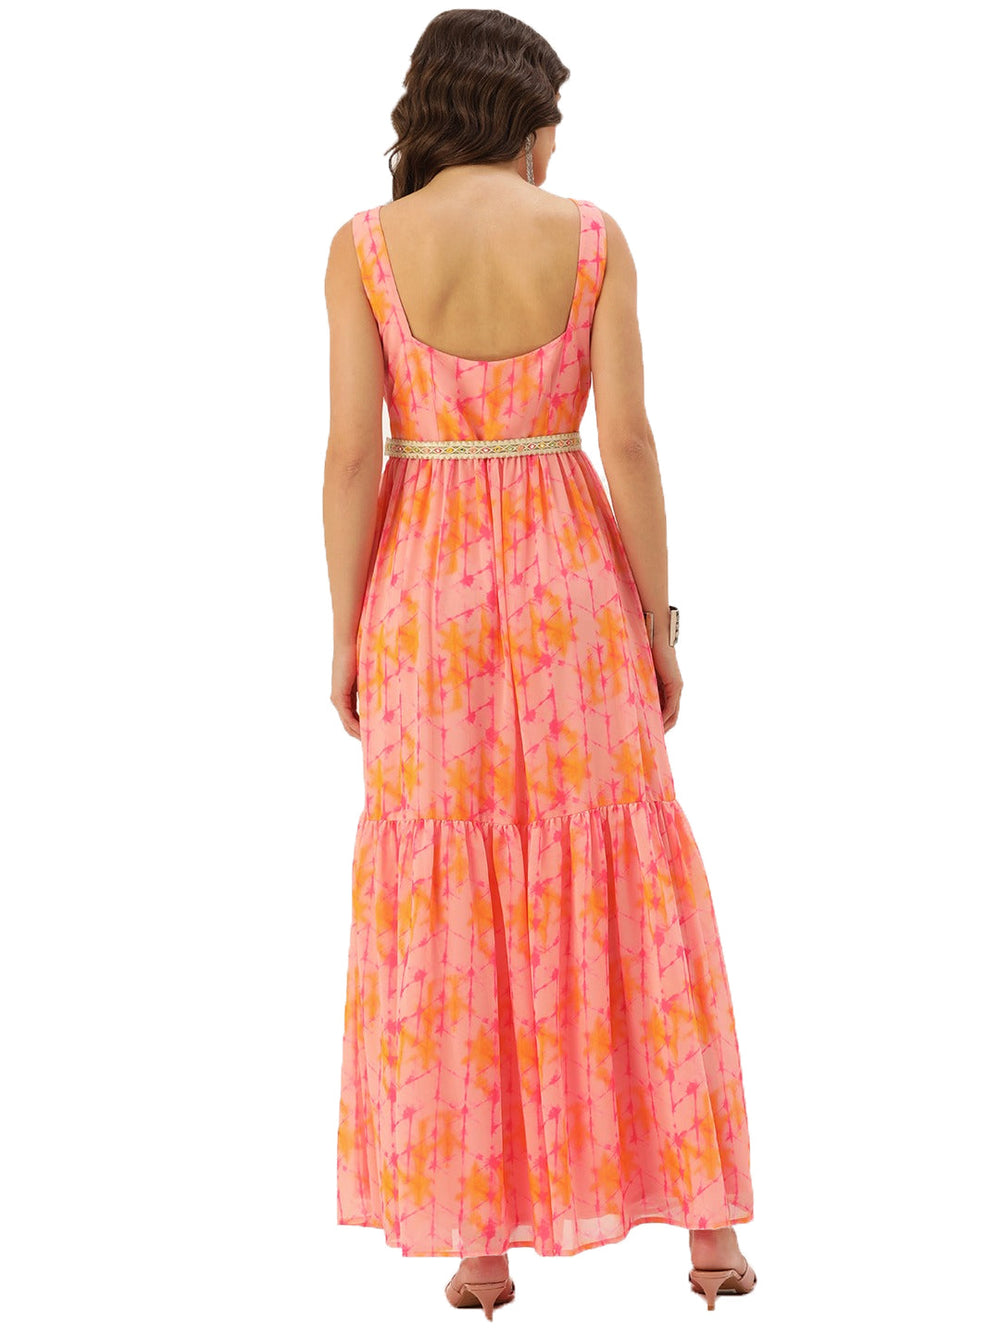 Multicolored-Digital-Printed-Tiered-Dress